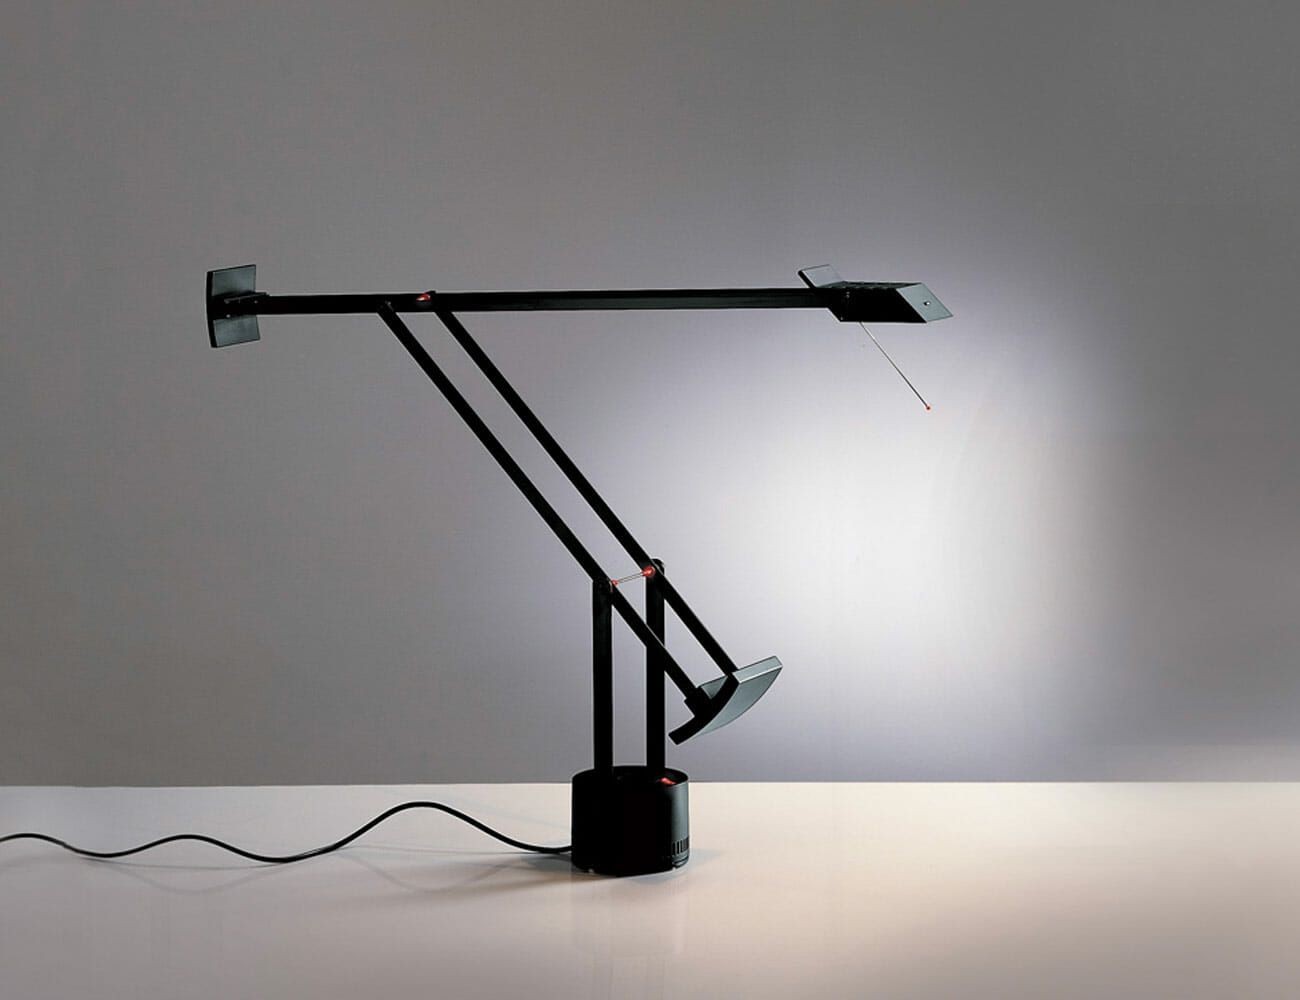 desk lamp designs